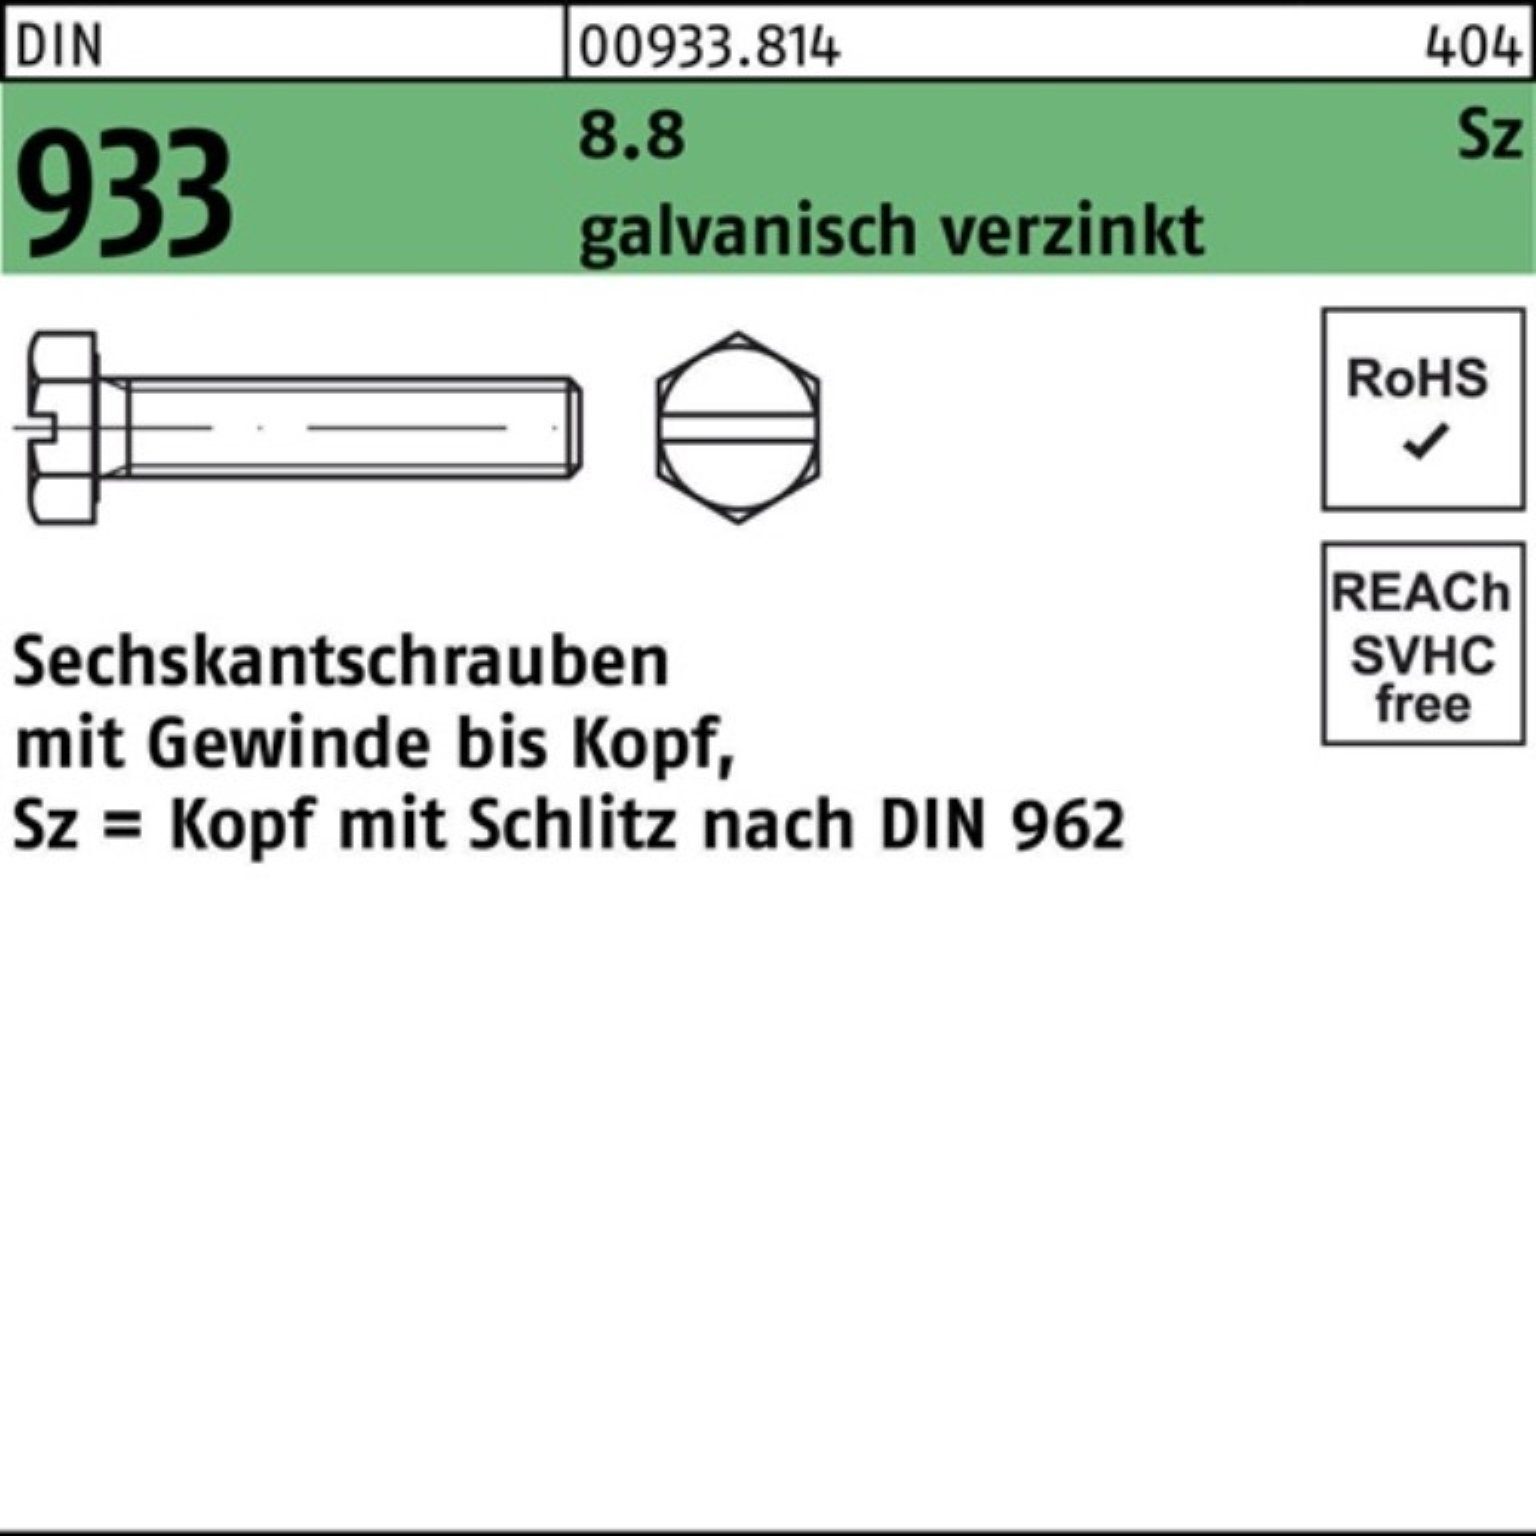 DIN 25 Sechskantschraube M6x 500er Reyher Pack VG/Schlitz Sechskantschraube 933 8.8 galv.verz.